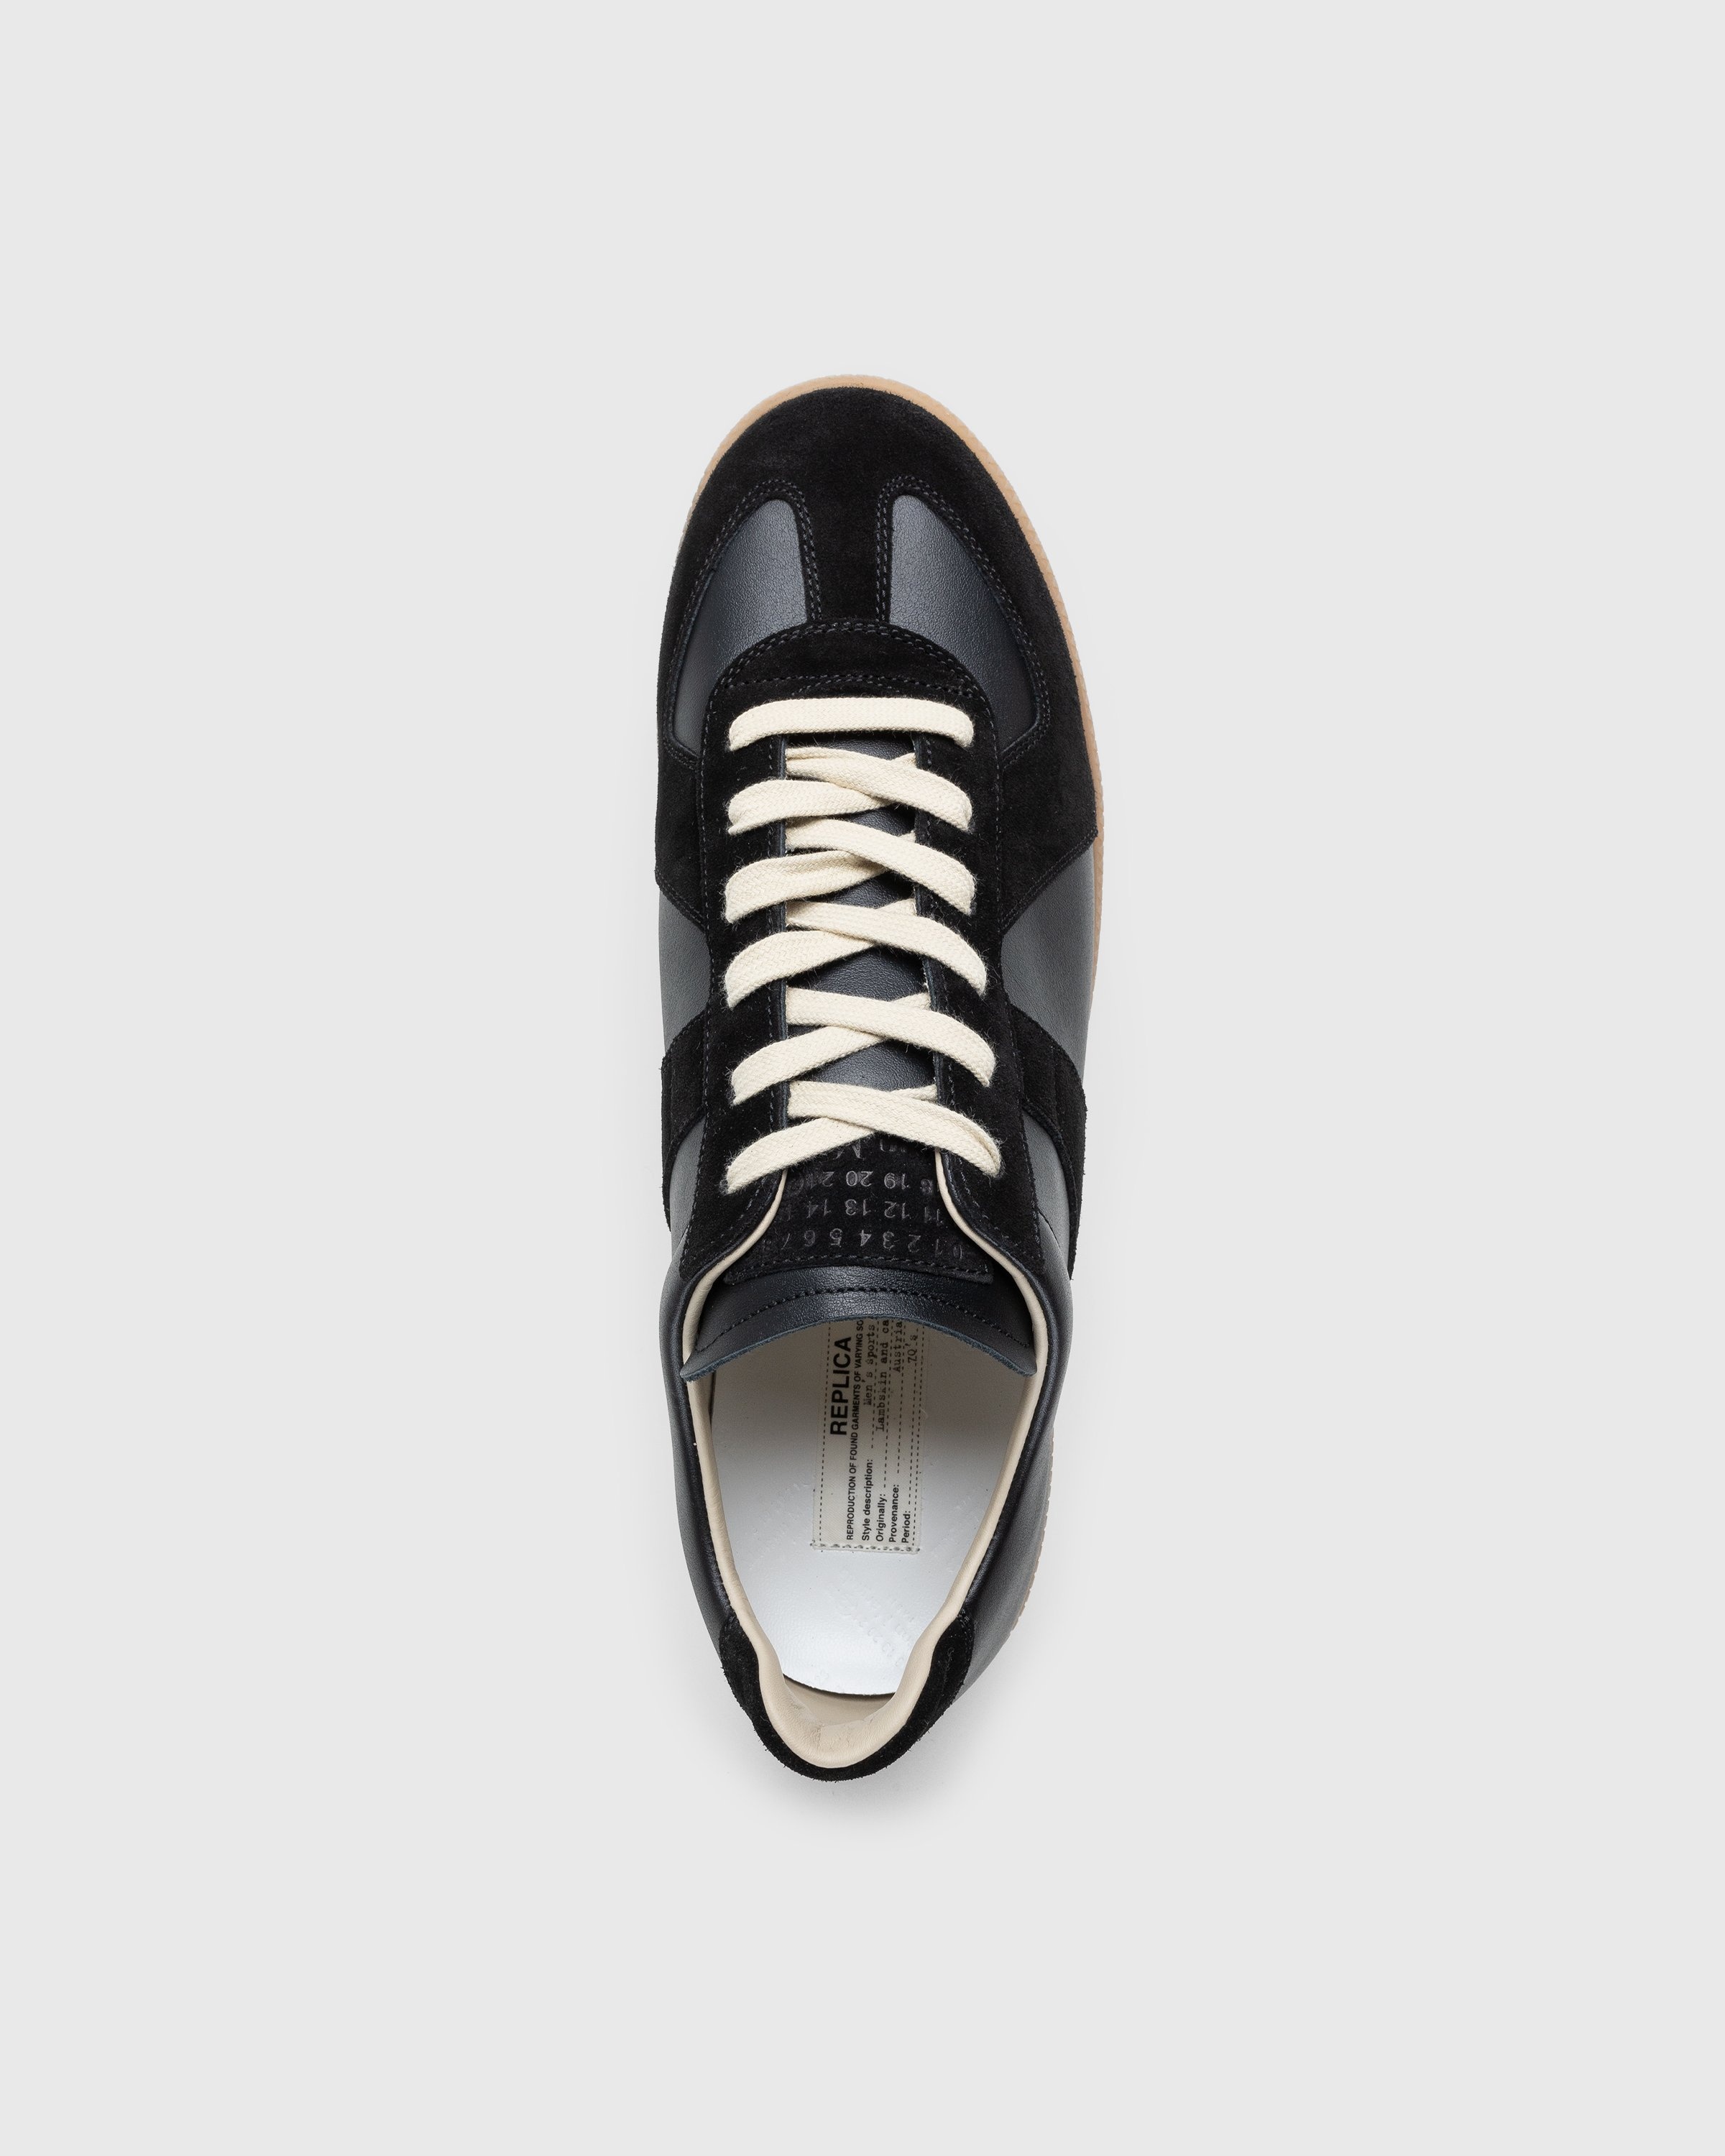 Maison Margiela – Leather Replica Sneakers Black - Sneakers - Black - Image 5